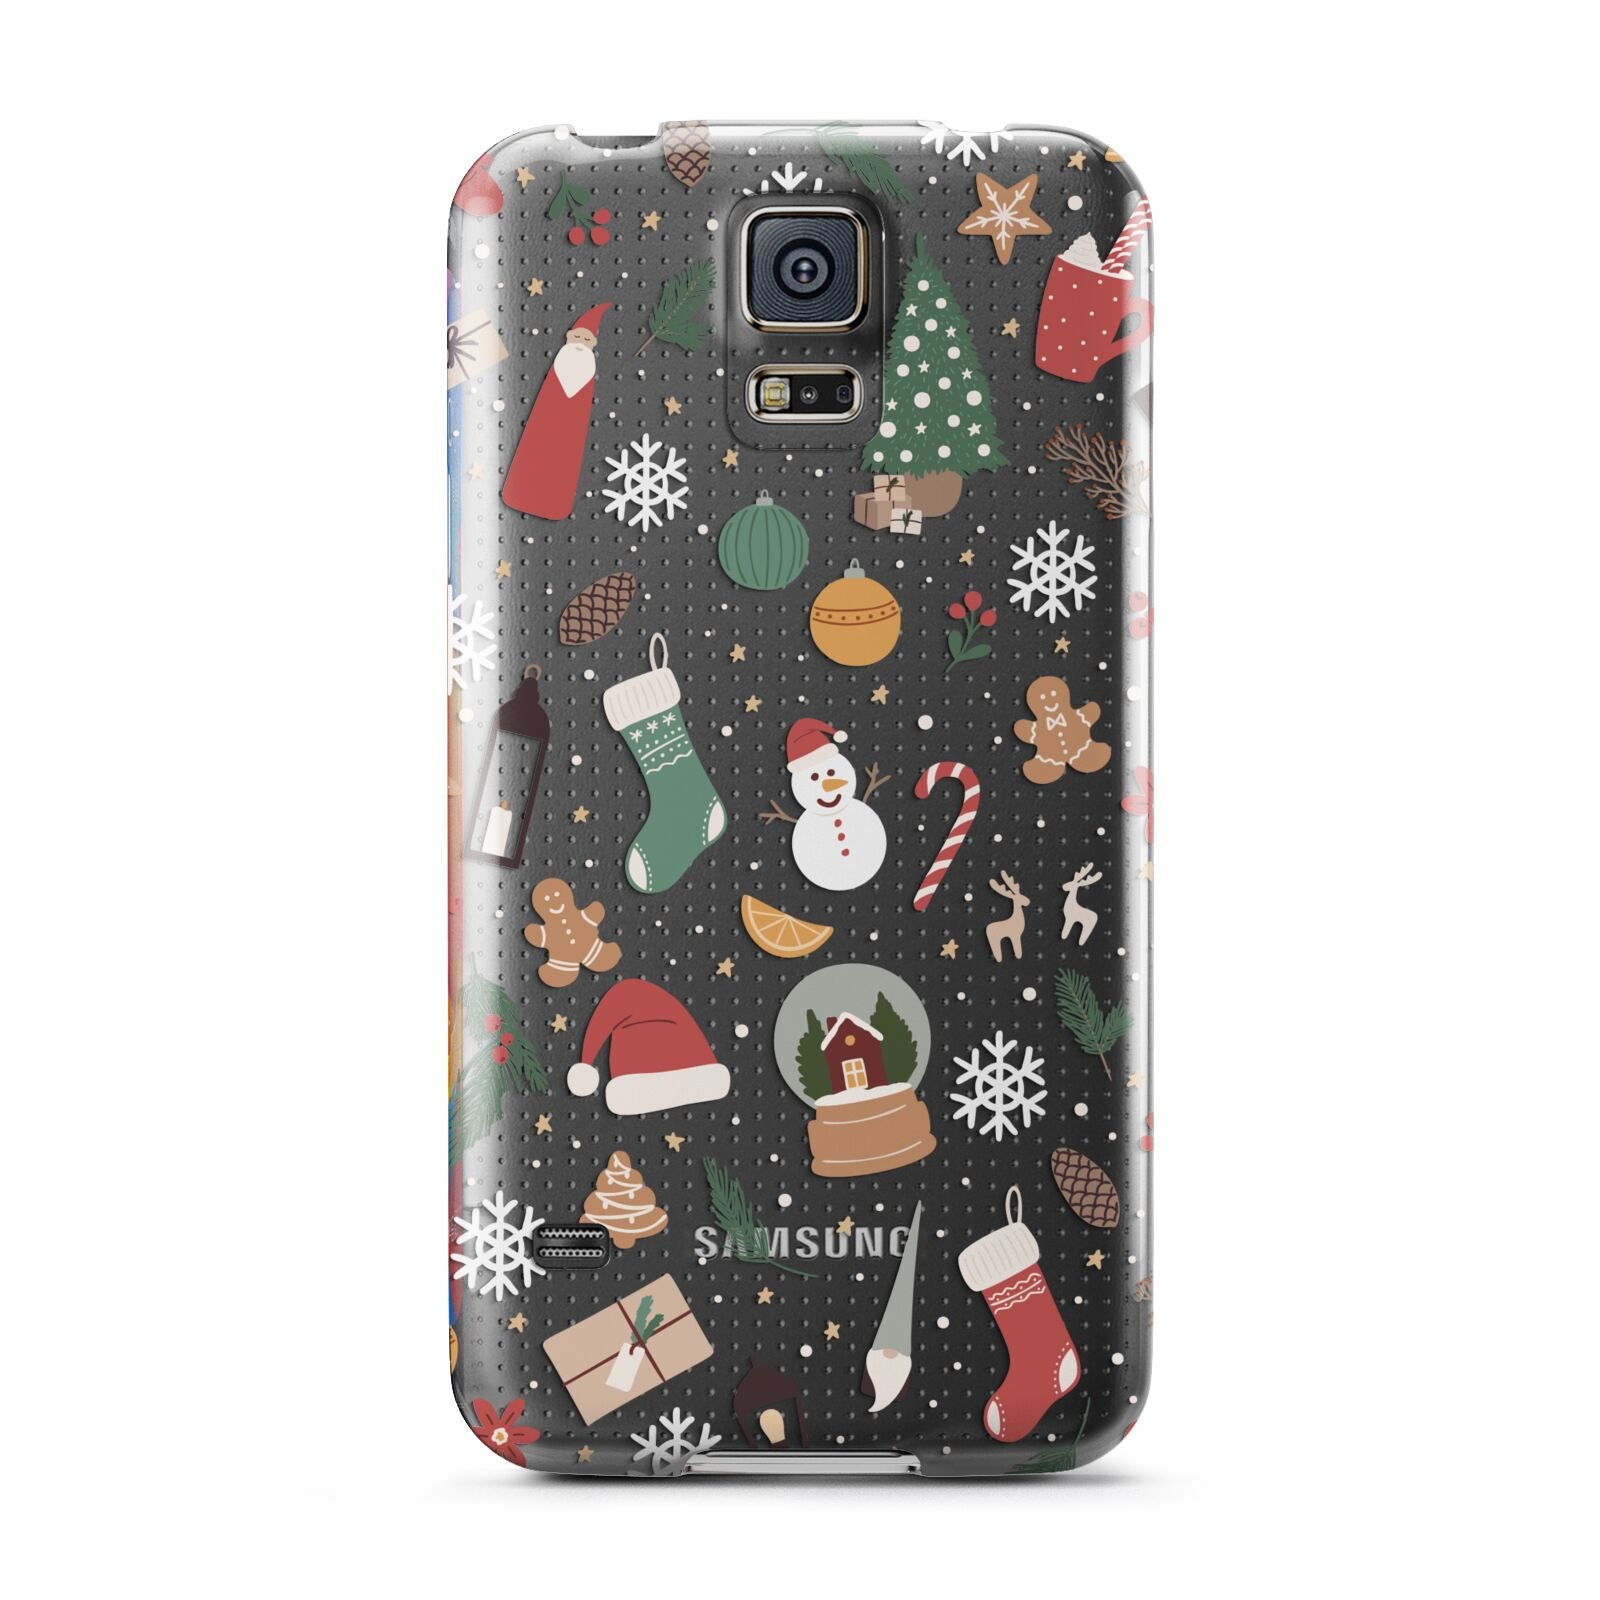 Christmas Assortments Samsung Galaxy S5 Case